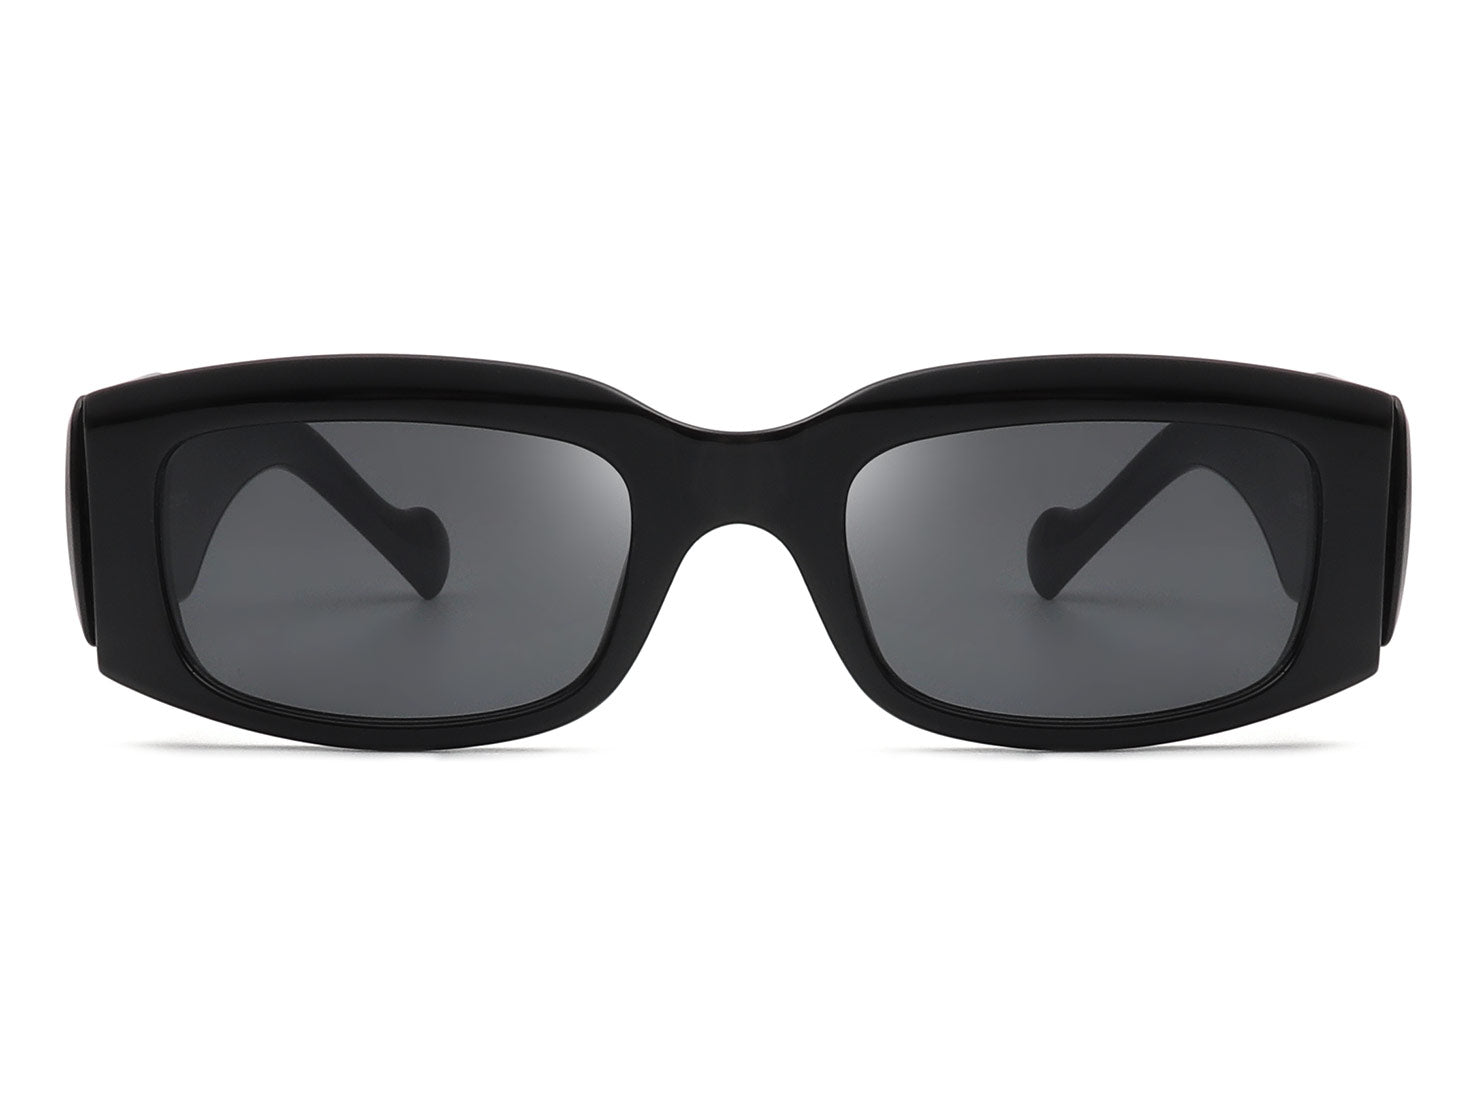 S1166 - Retro Rectangle Bold Vintage Thick Frame Fashion Sunglasses